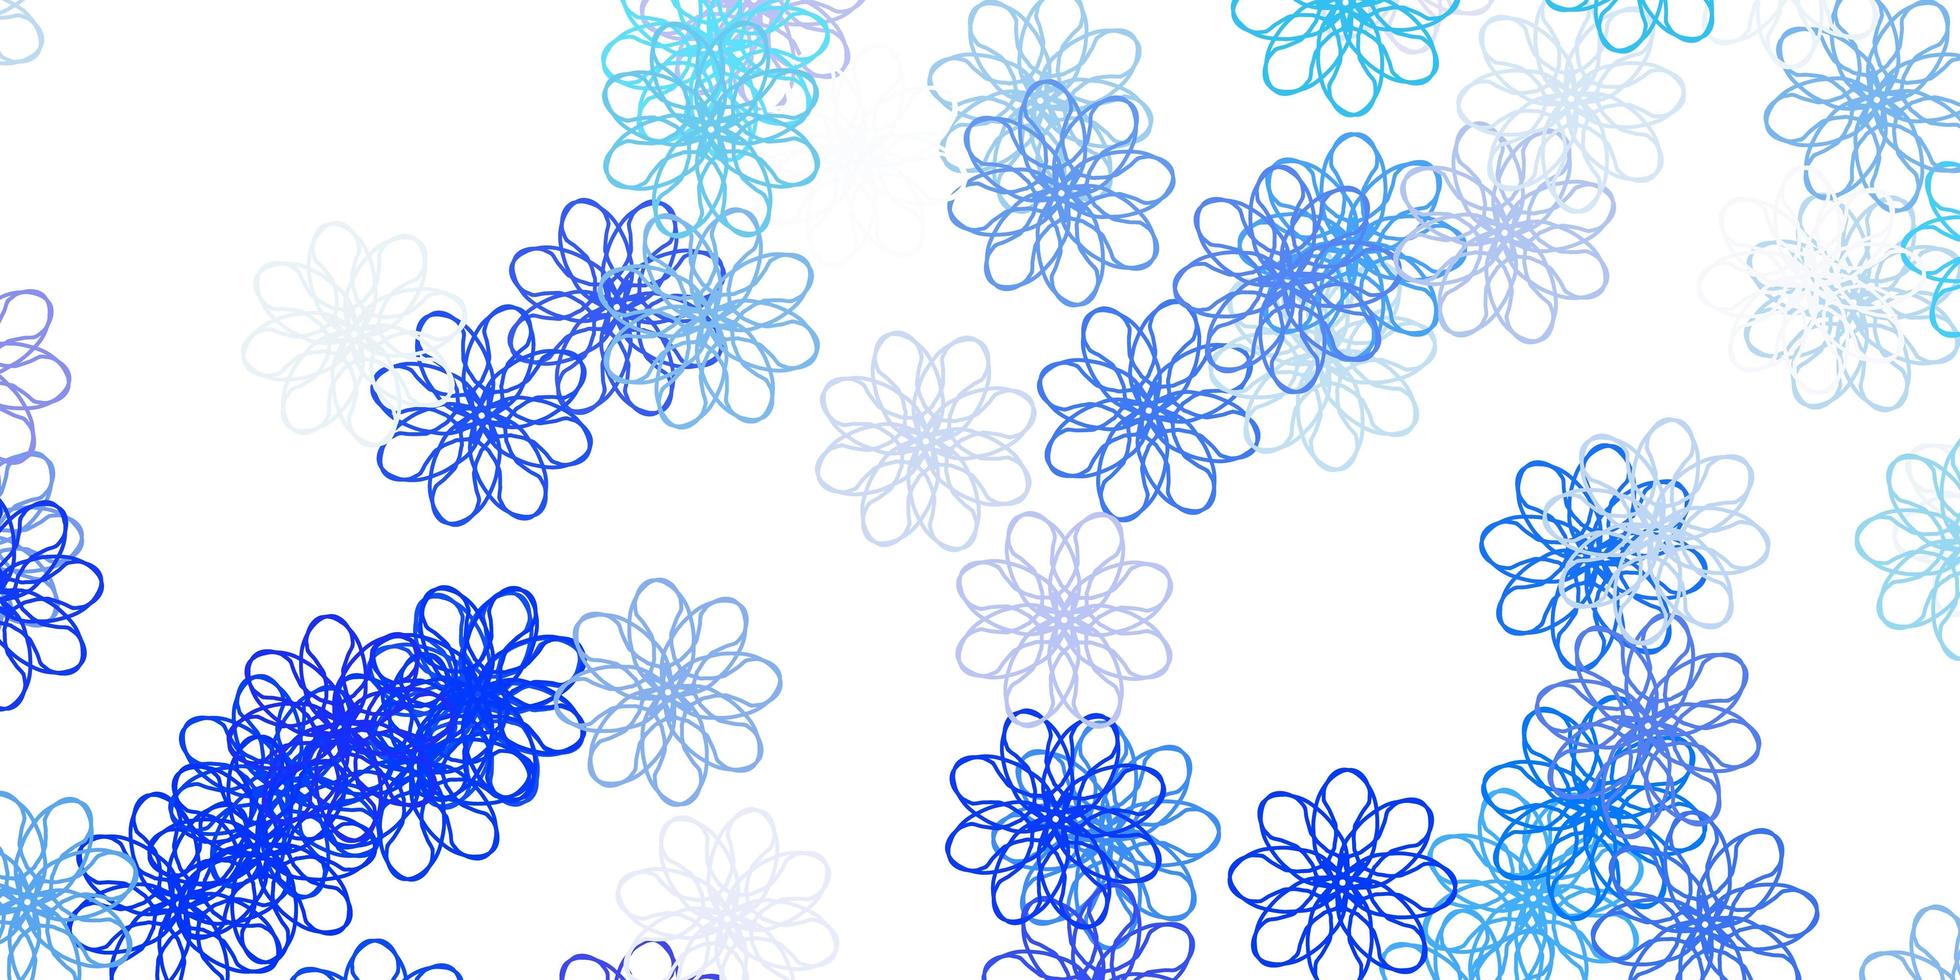 ljusblå vektor doodle mönster med blommor